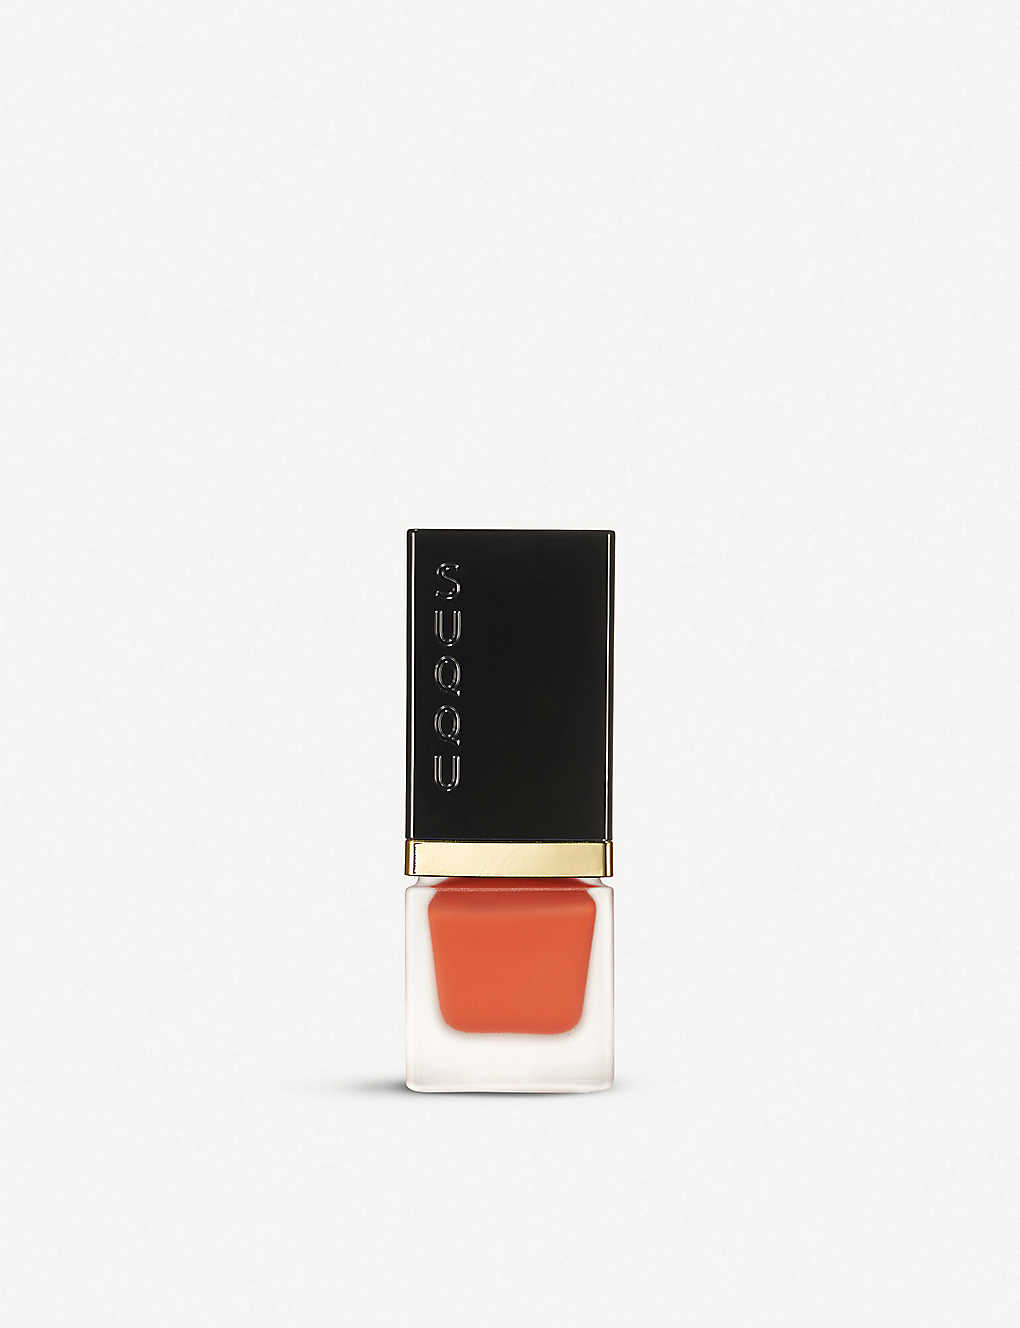 Suqqu Shimmer Liquid Blush In 03 Hot Orange